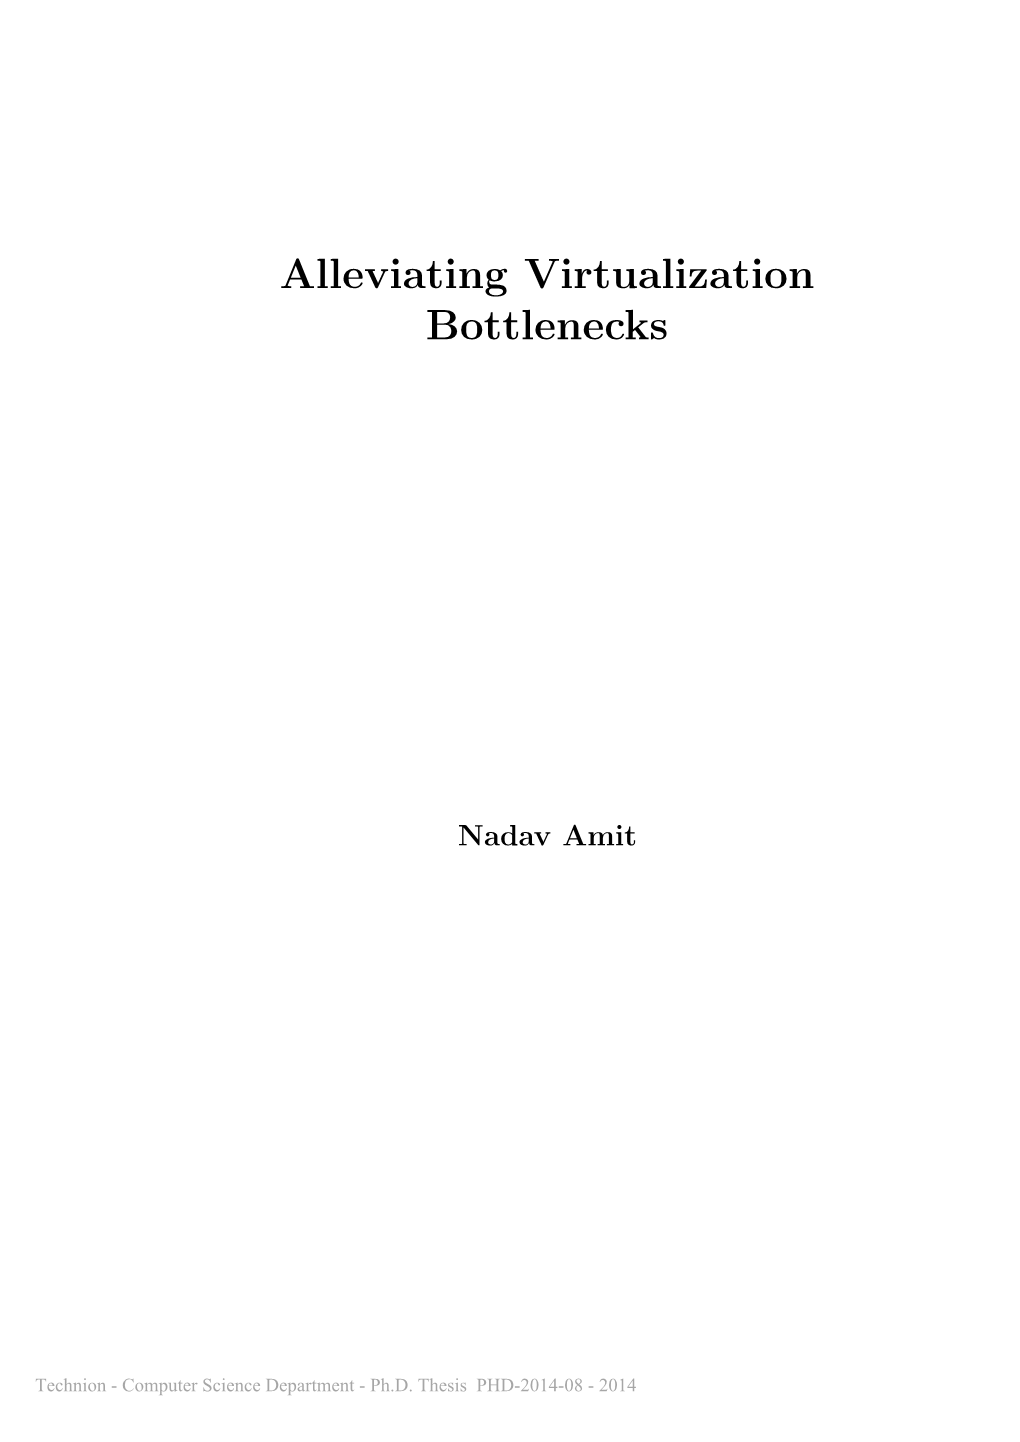 Alleviating Virtualization Bottlenecks